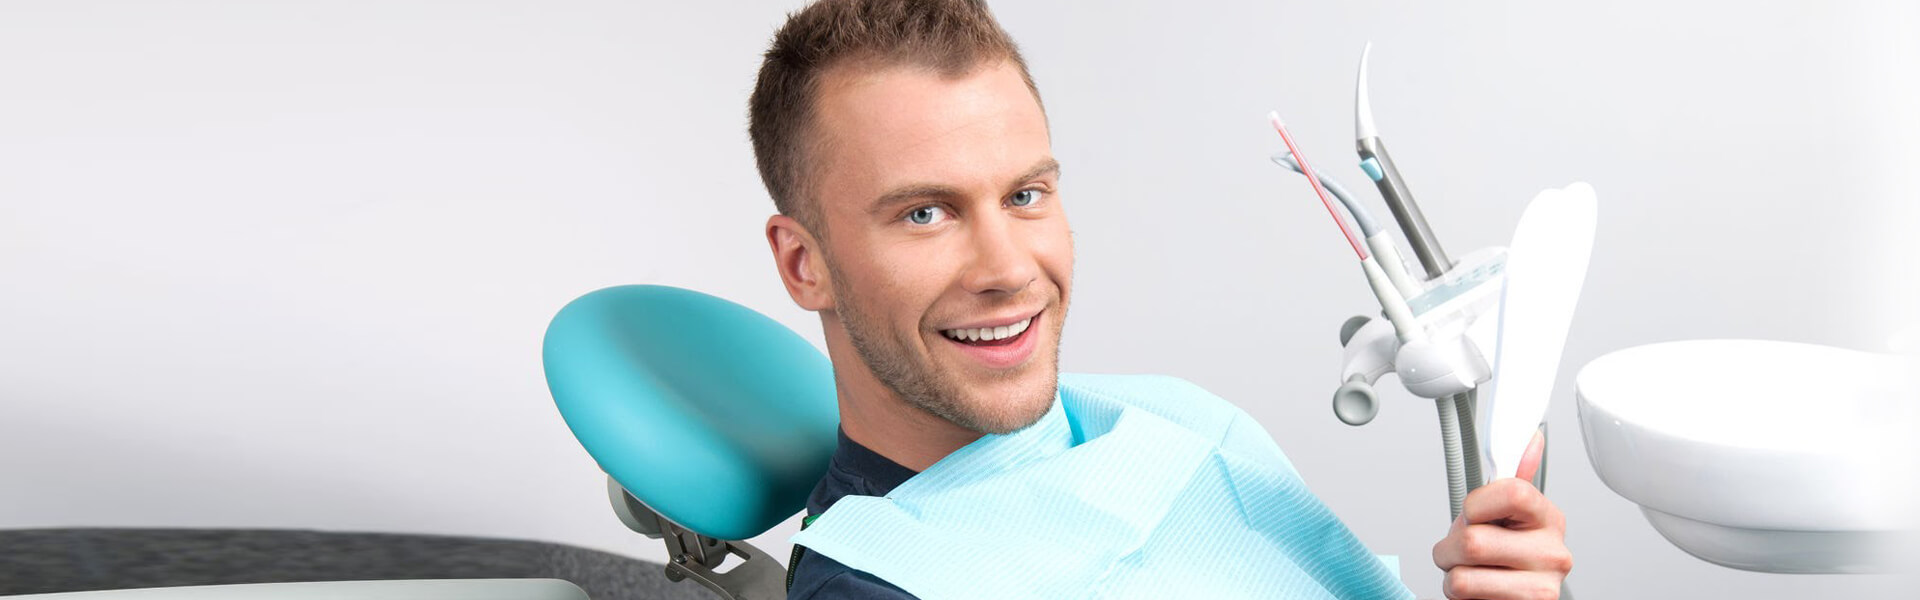 Wisdom Teeth Removal Specialist In Salt Lake City, UT